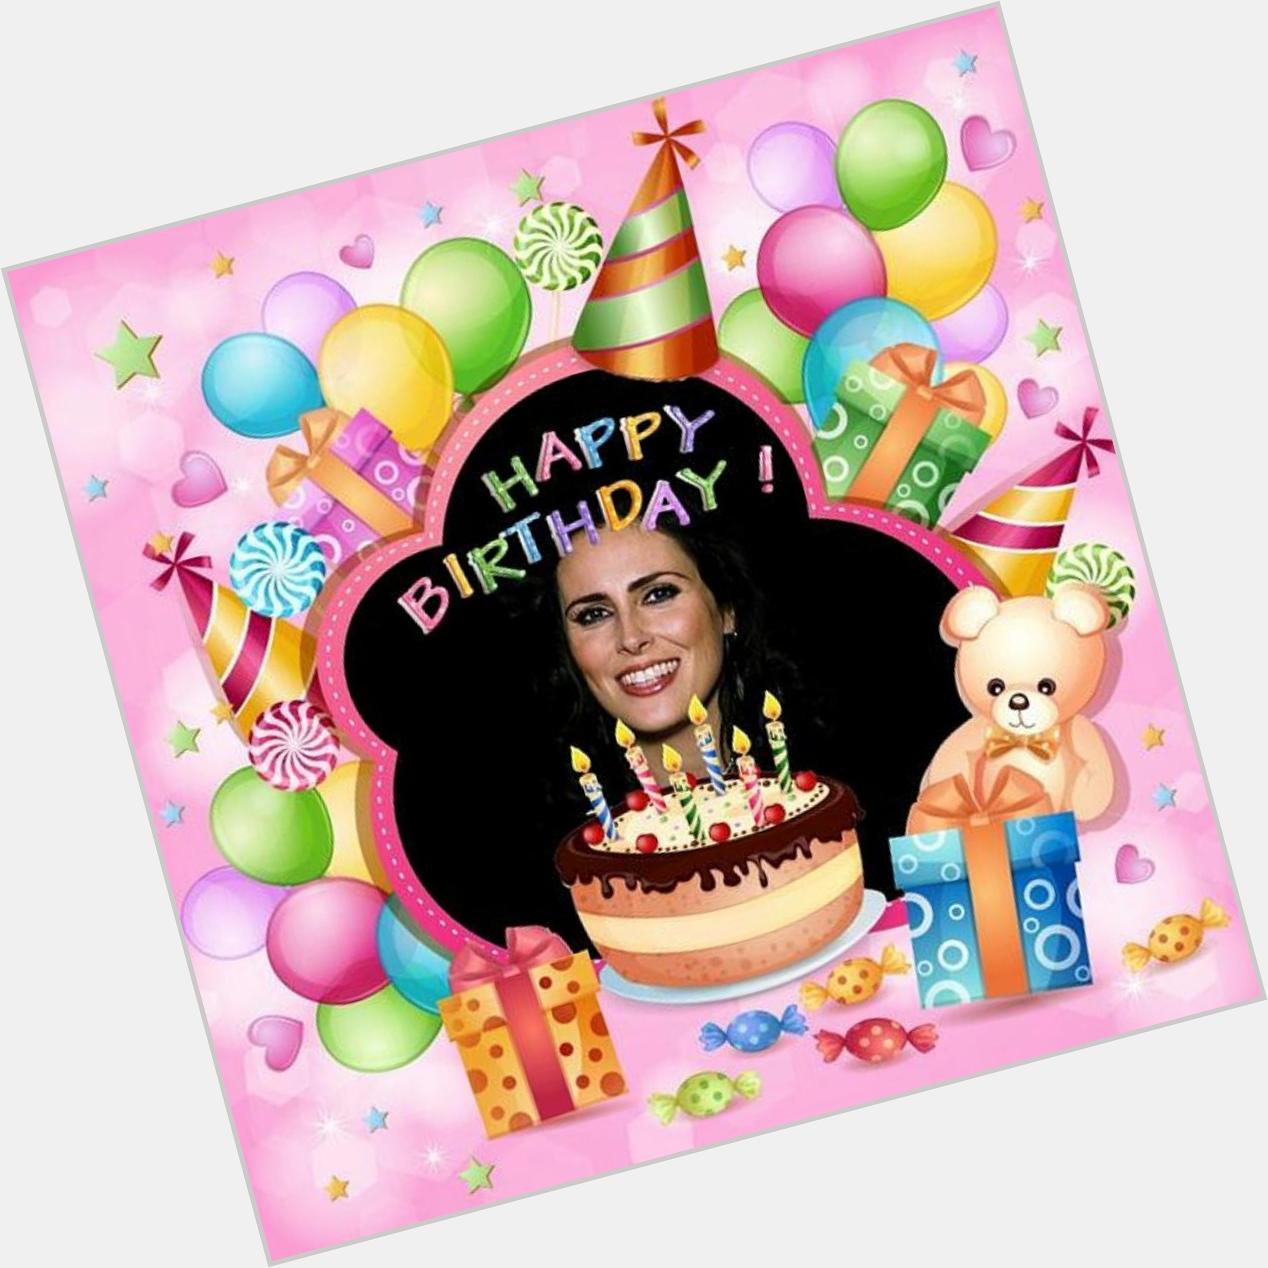 Happy Birthday Sharon den Adel 41 years. 